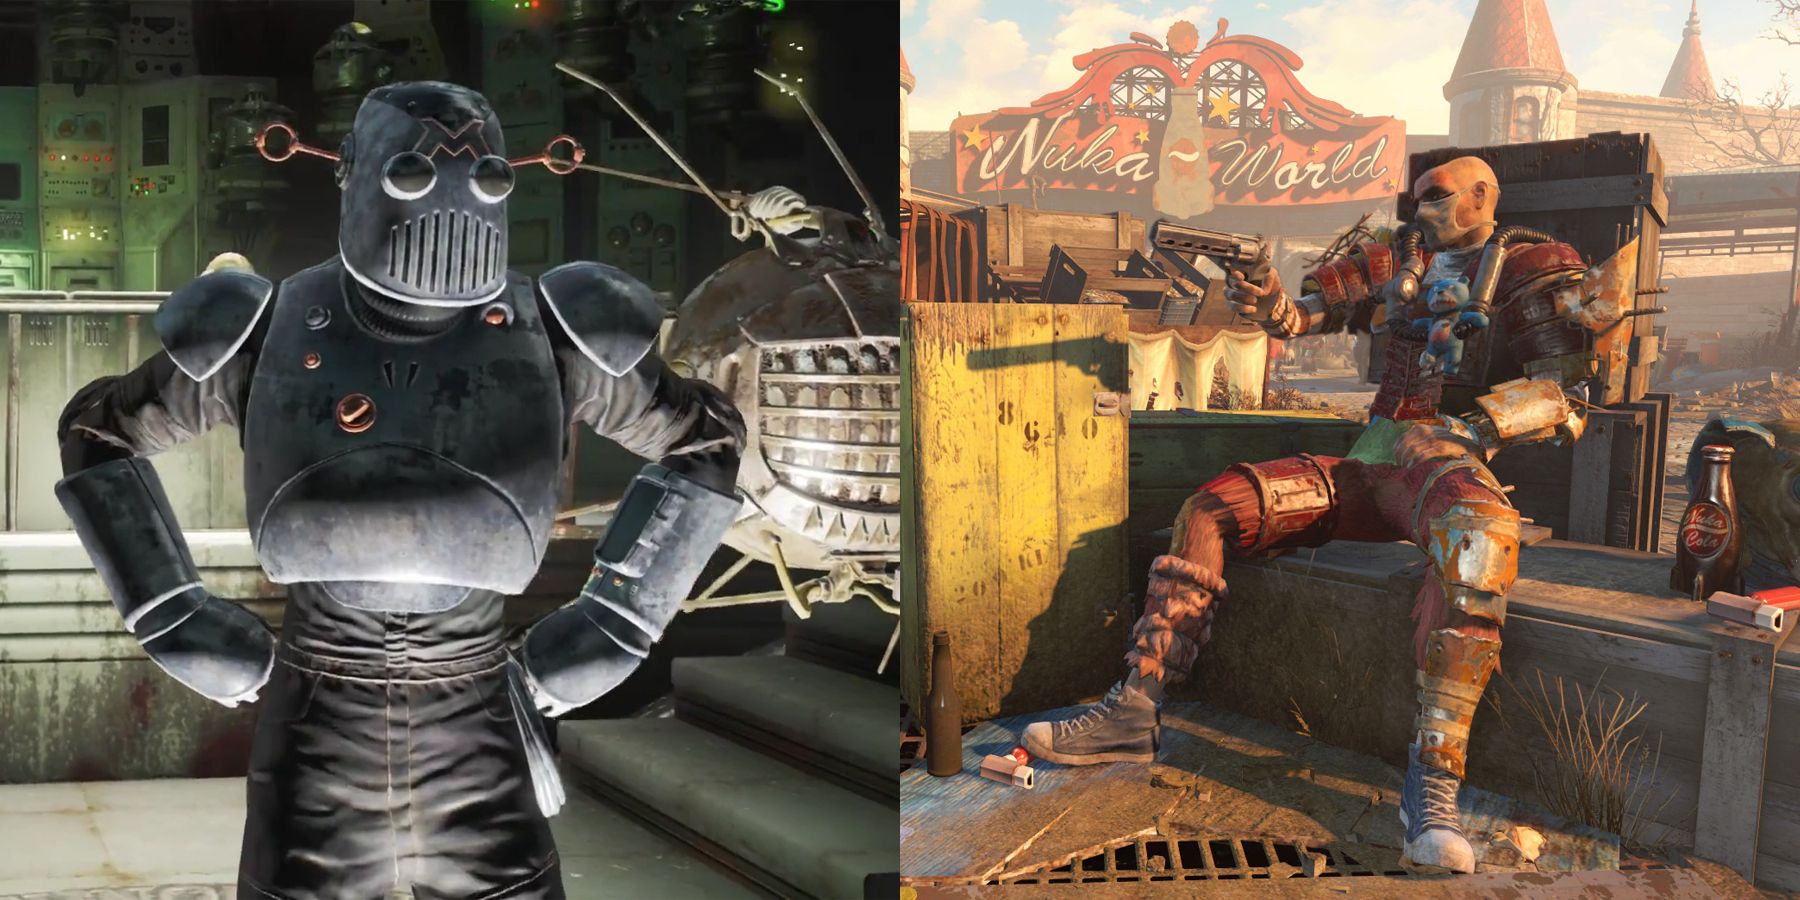 Fallout 4 Mechanist and Nuka World raider